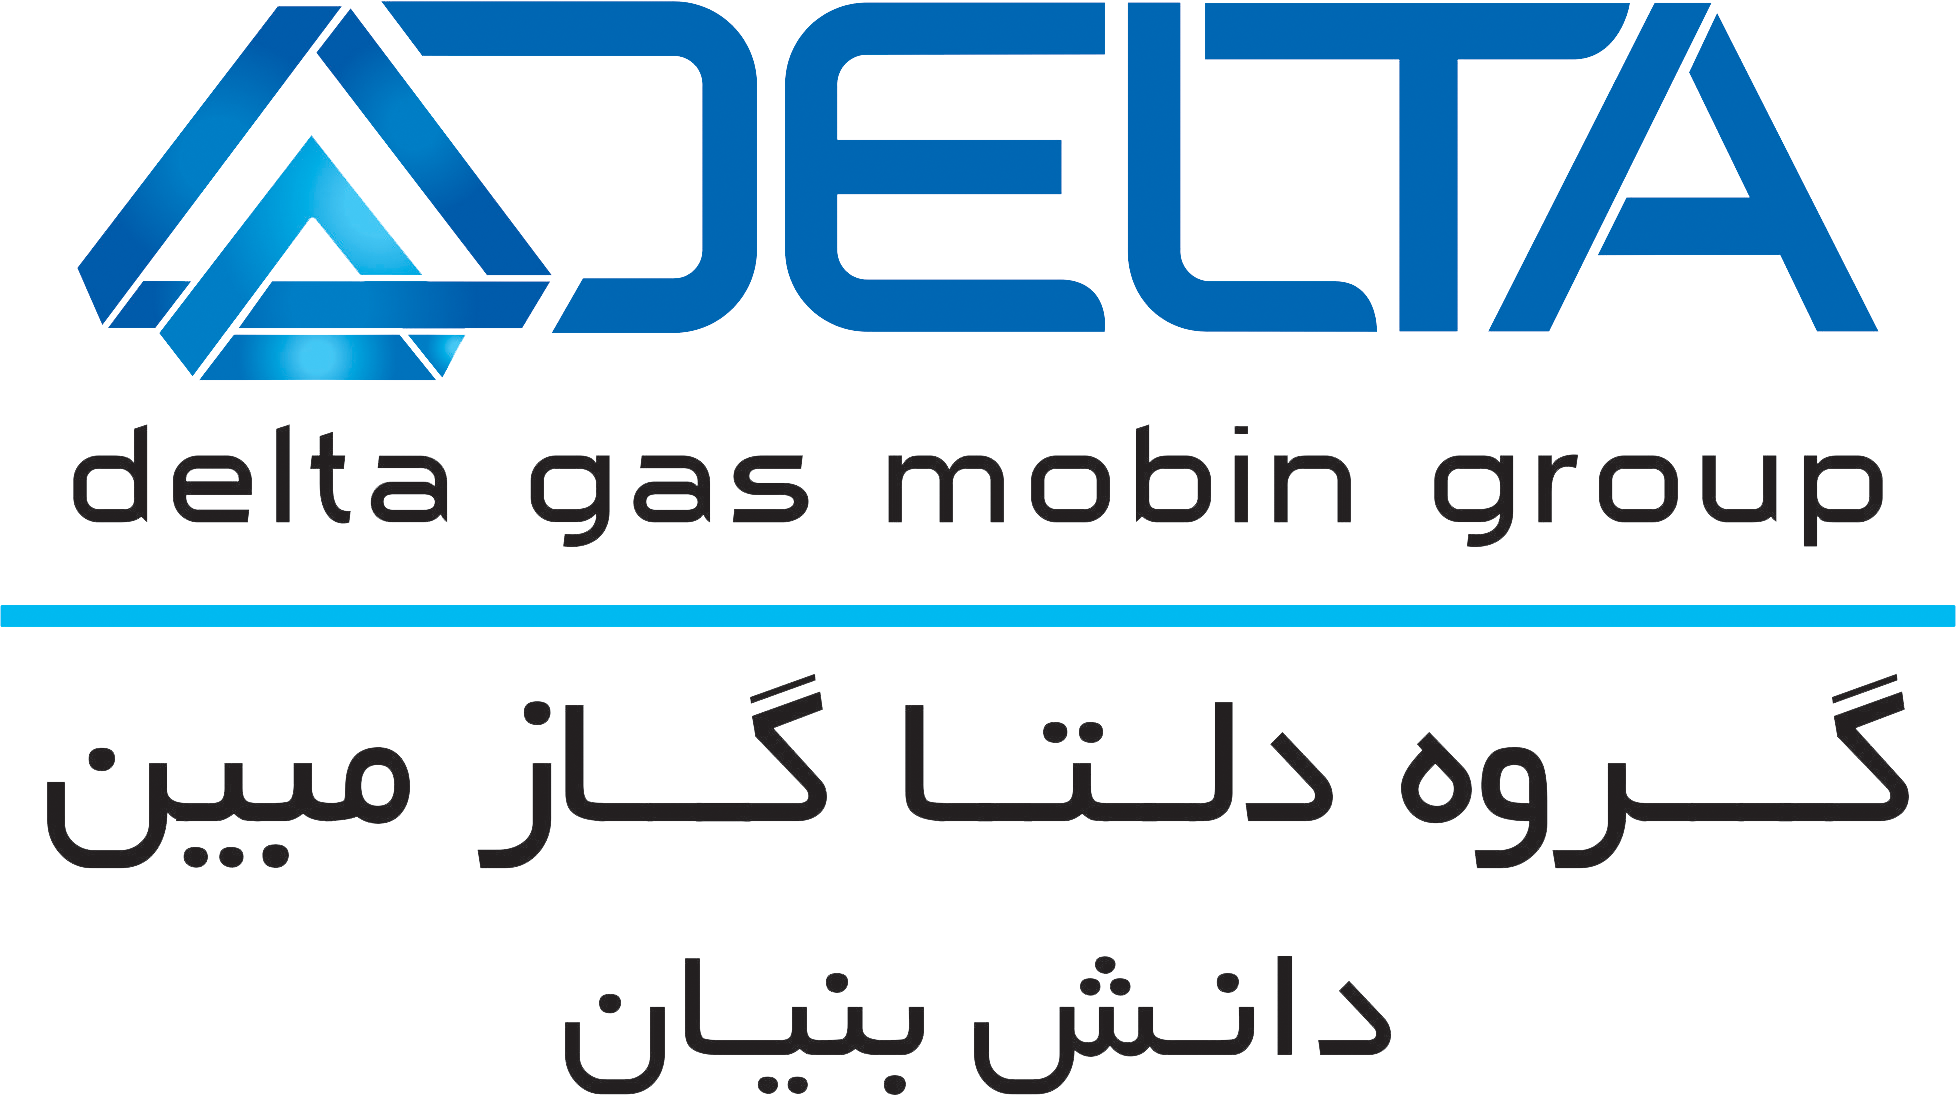 کارشناس ابزار دقیق | Instrumentation Expert - گروه دلتا گاز مبین | Delta Gas Mobin Group